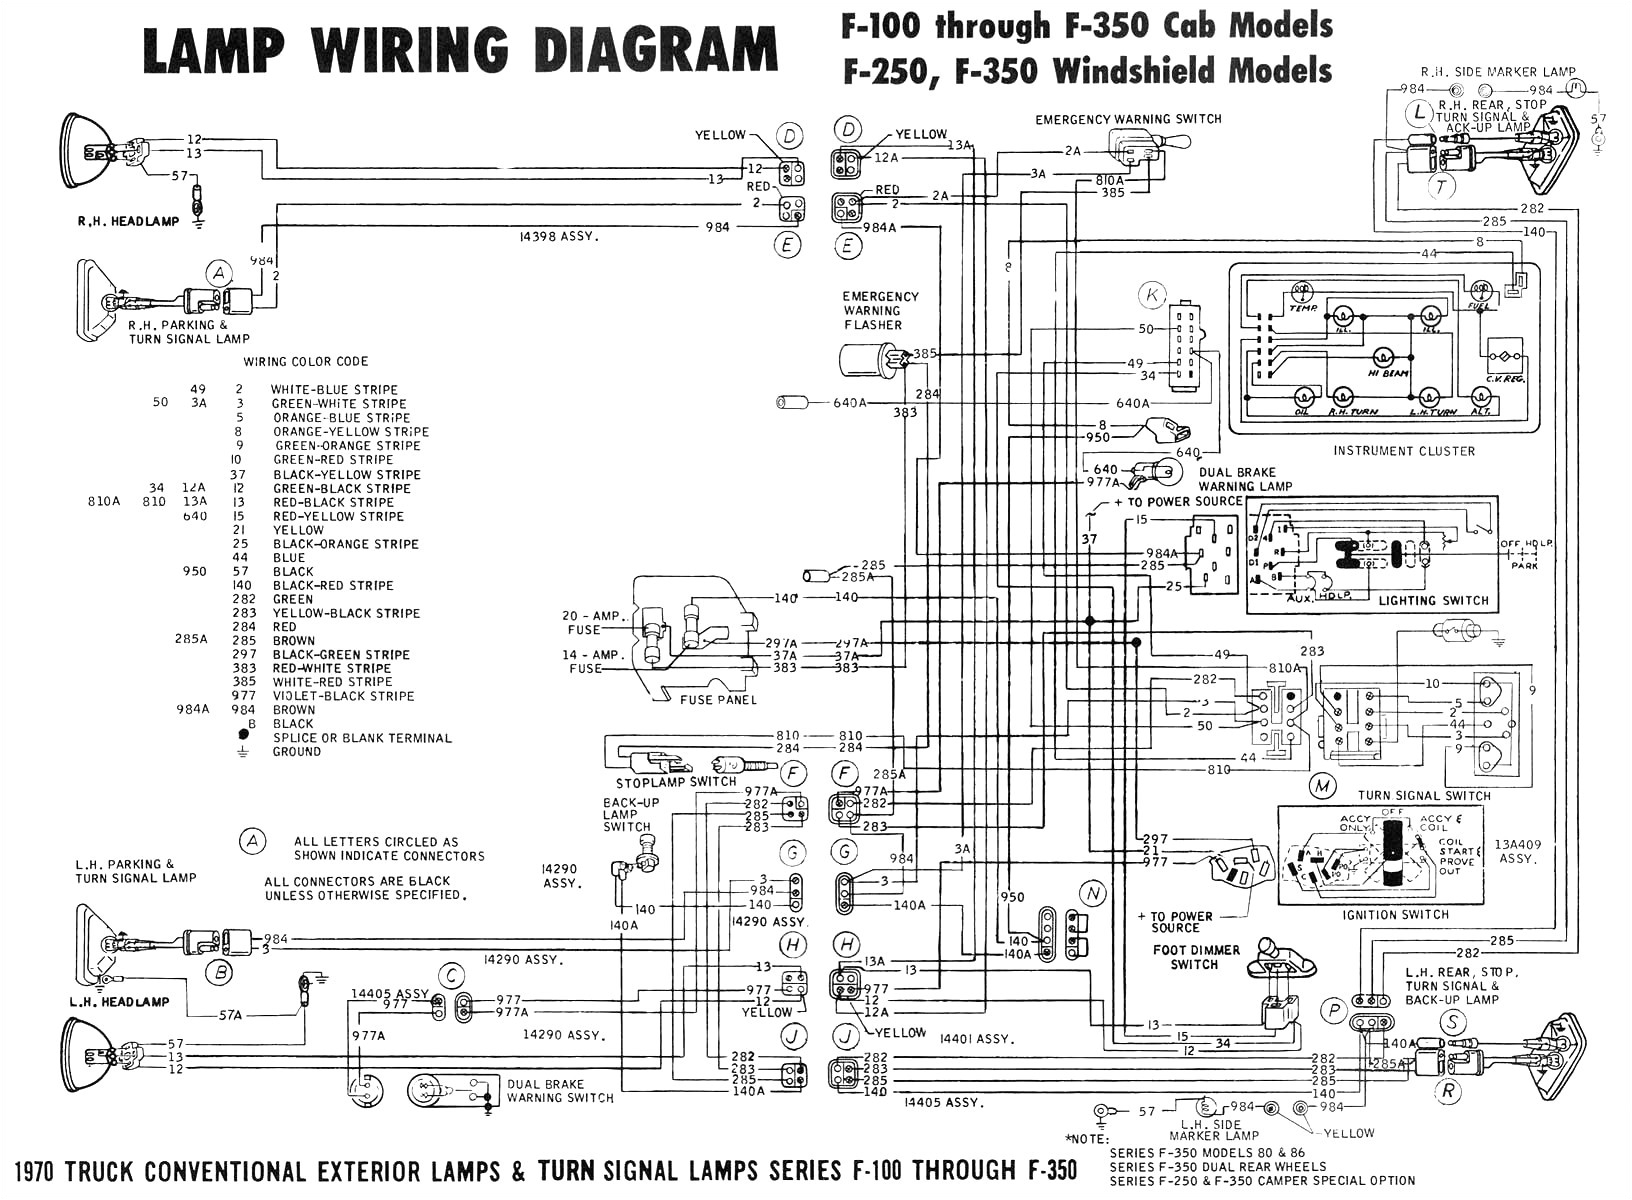 brighthouse wiring diagram wiring diagram brighthouse wiring diagram